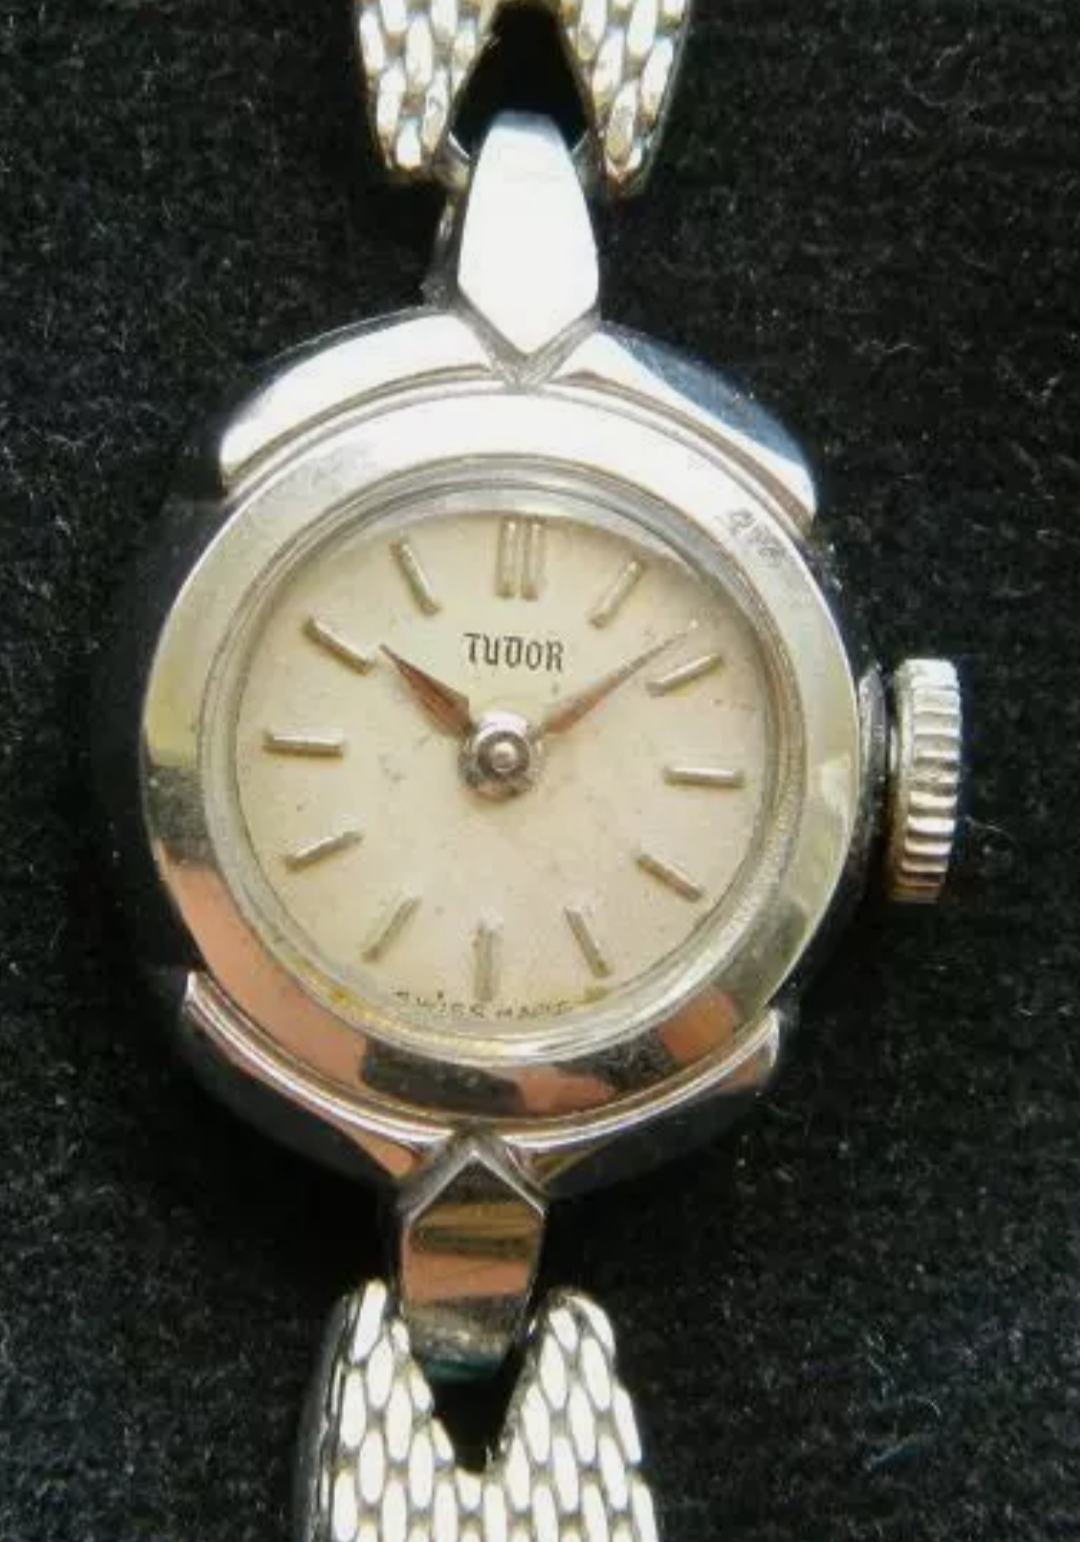 Vintage classic Swiss Tudor lady watch with 10K GF steel band